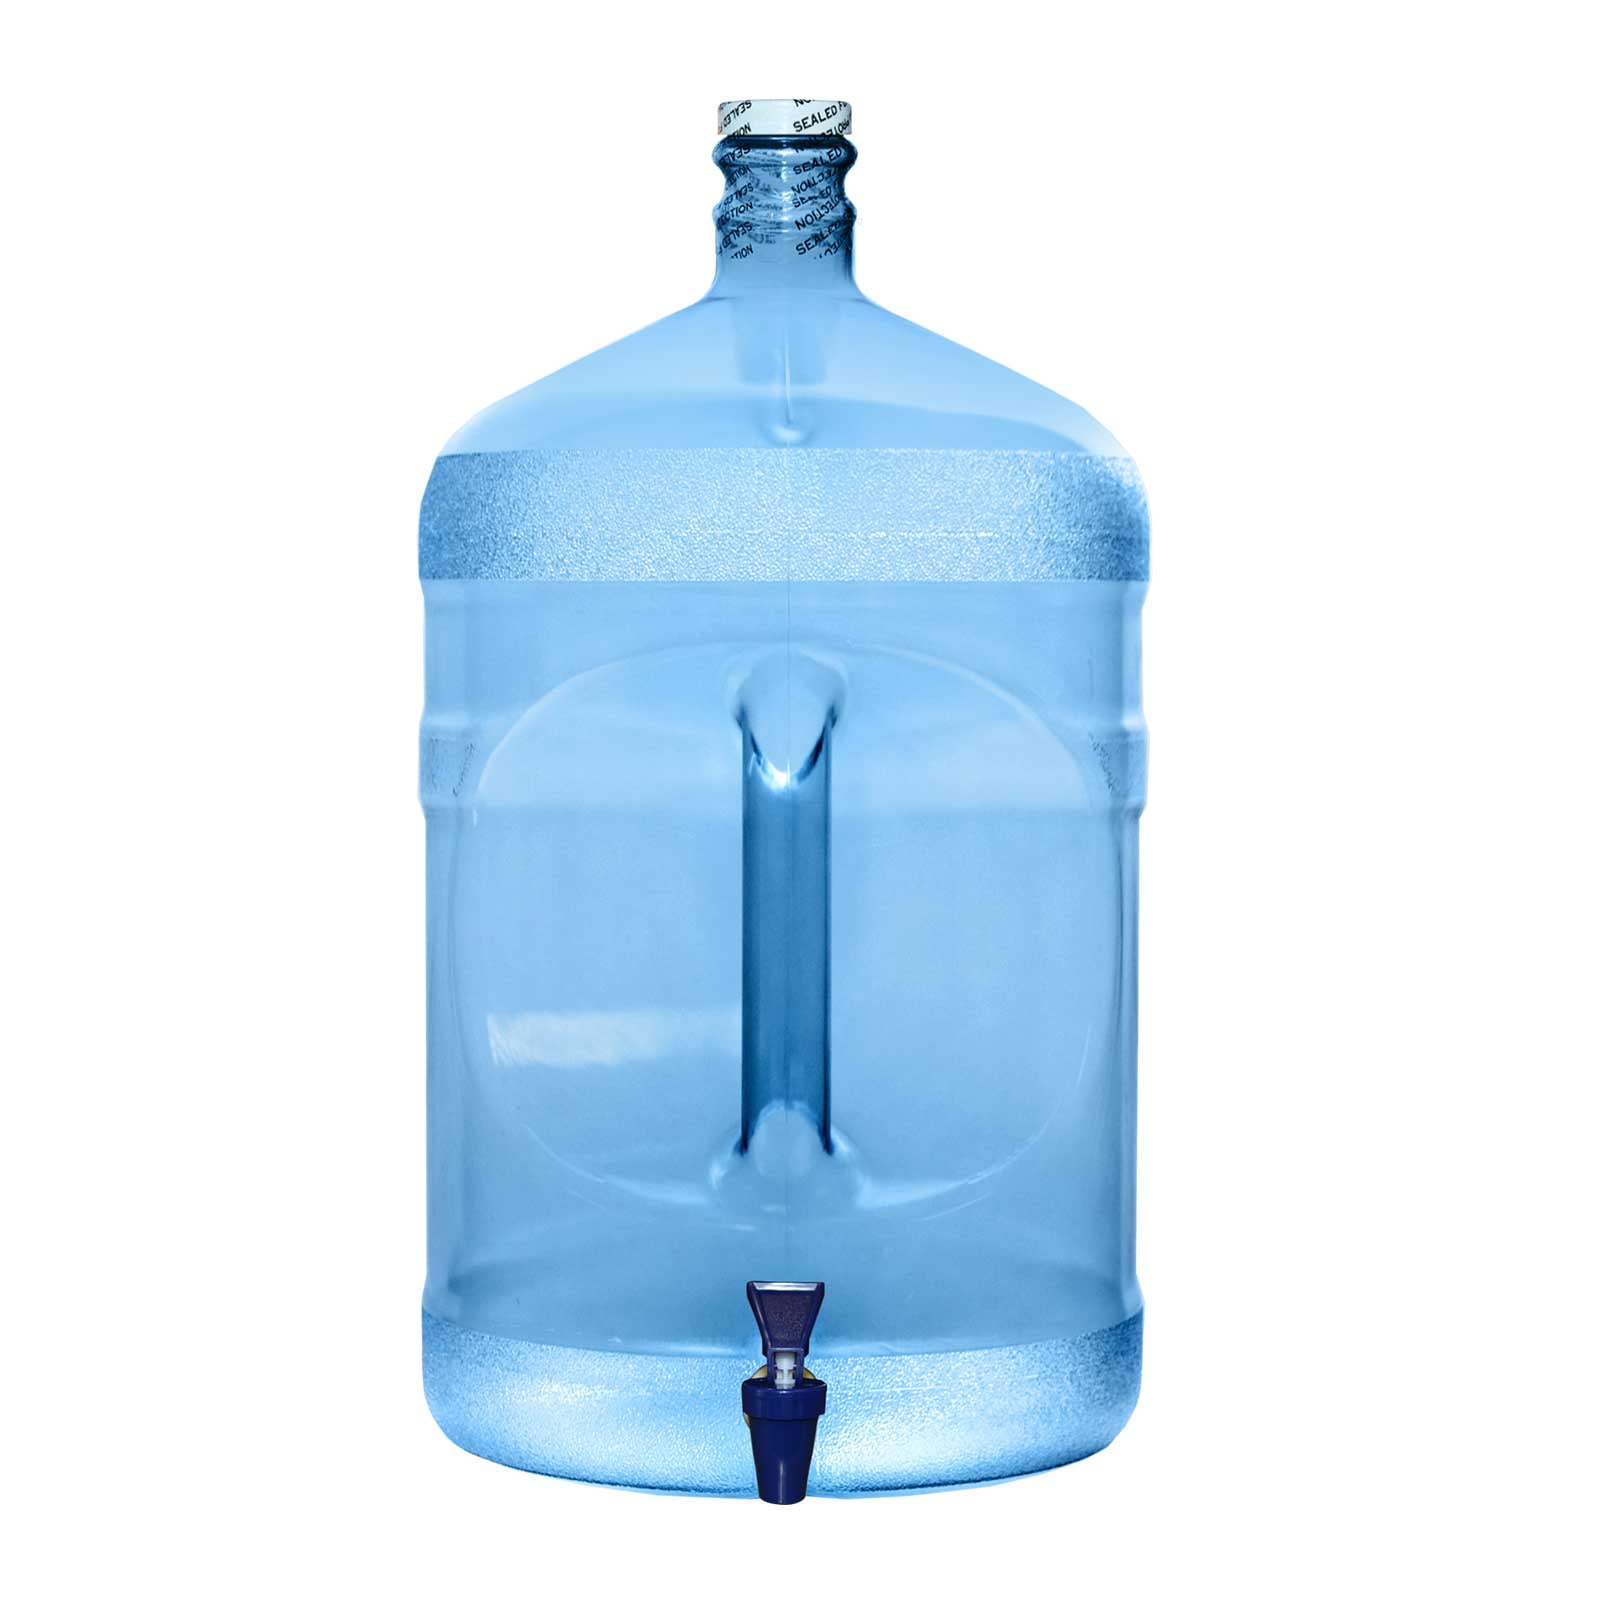 water bottle and dispenser